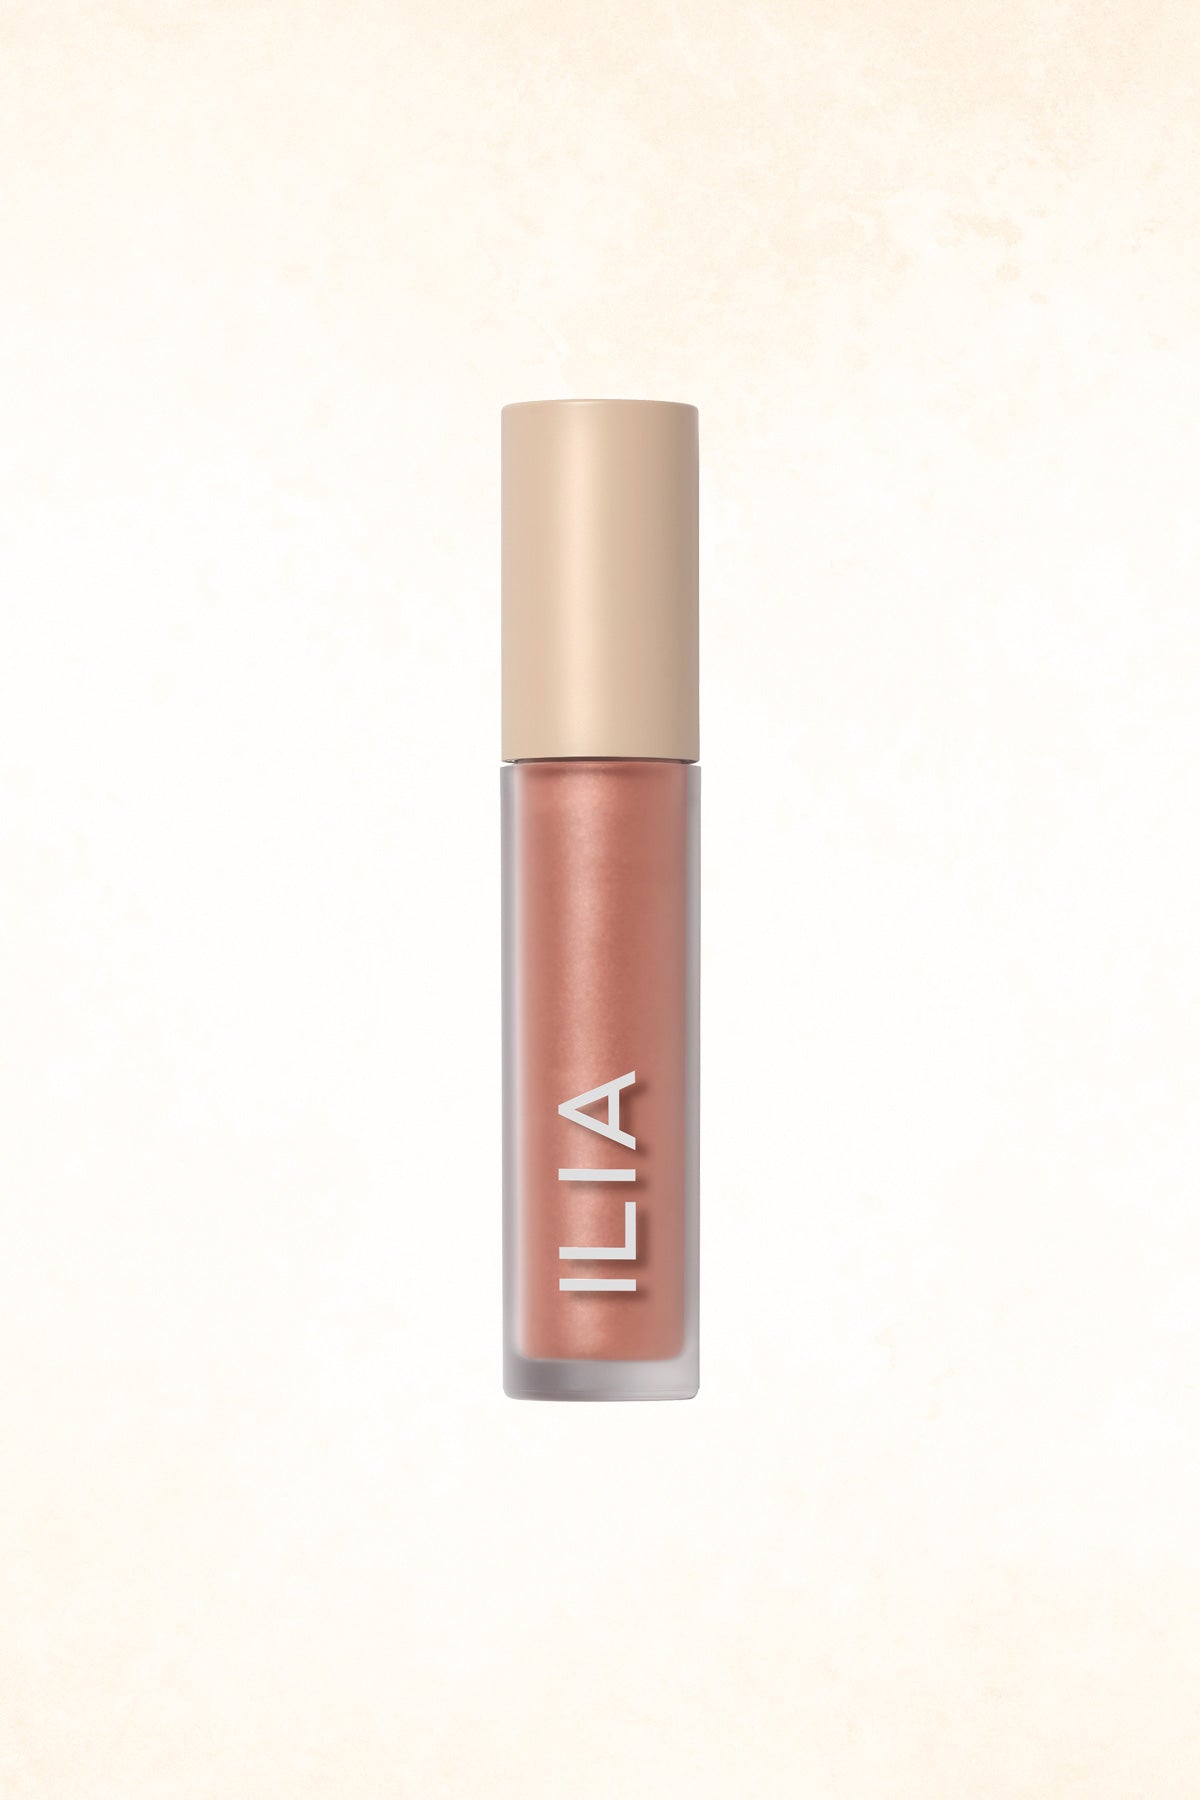 ILIA - Liquid Powder Chromatic Eye Tint - Mythic